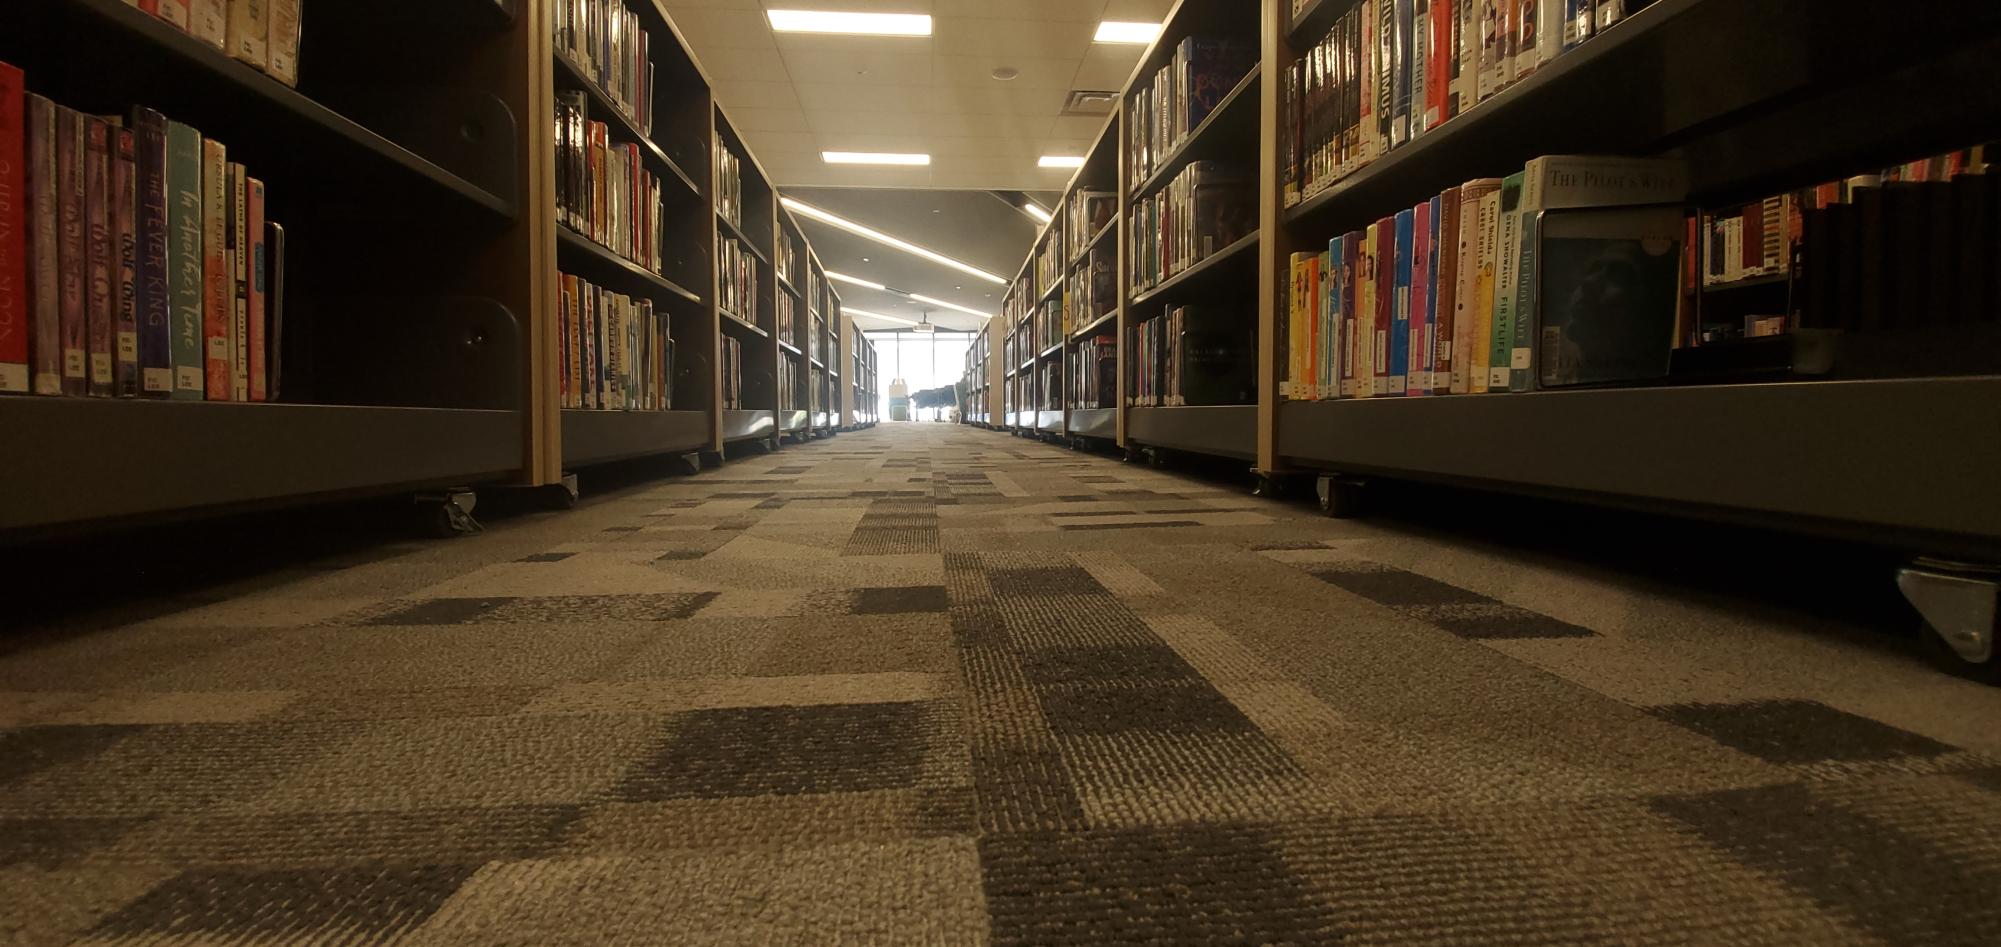 Photo of Central Kitsap High School bookshelf isle in library.